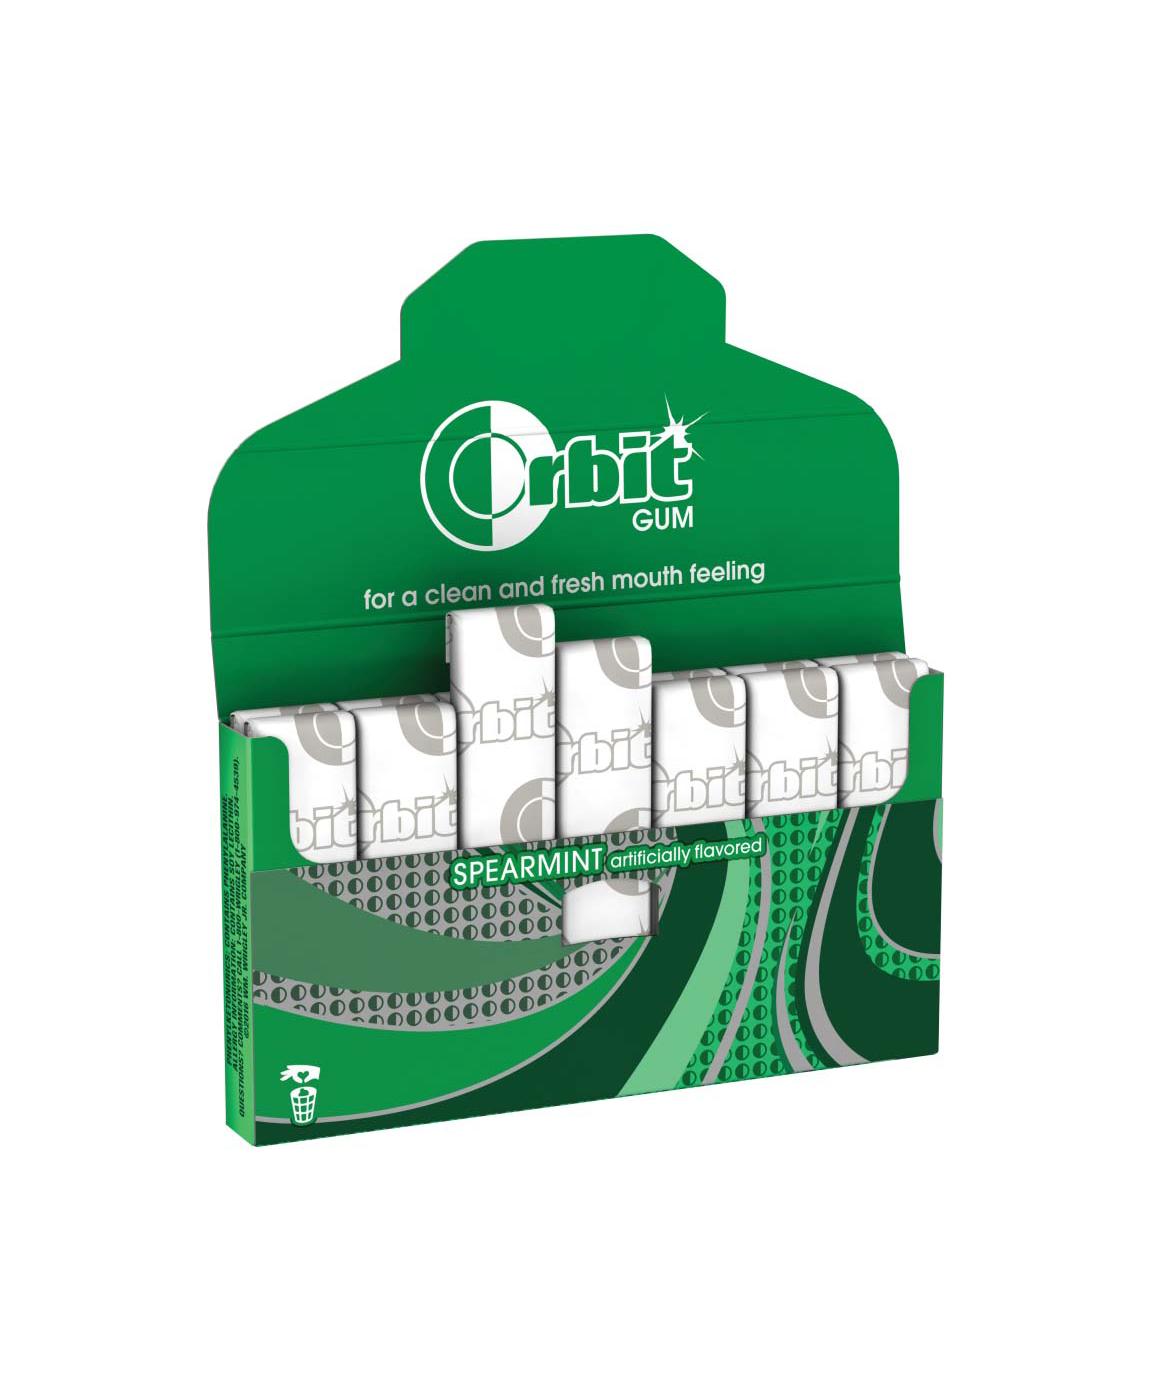 Orbit Sugar Free Chewing Gum Value Pack - Spearmint, 8 Pk; image 3 of 5